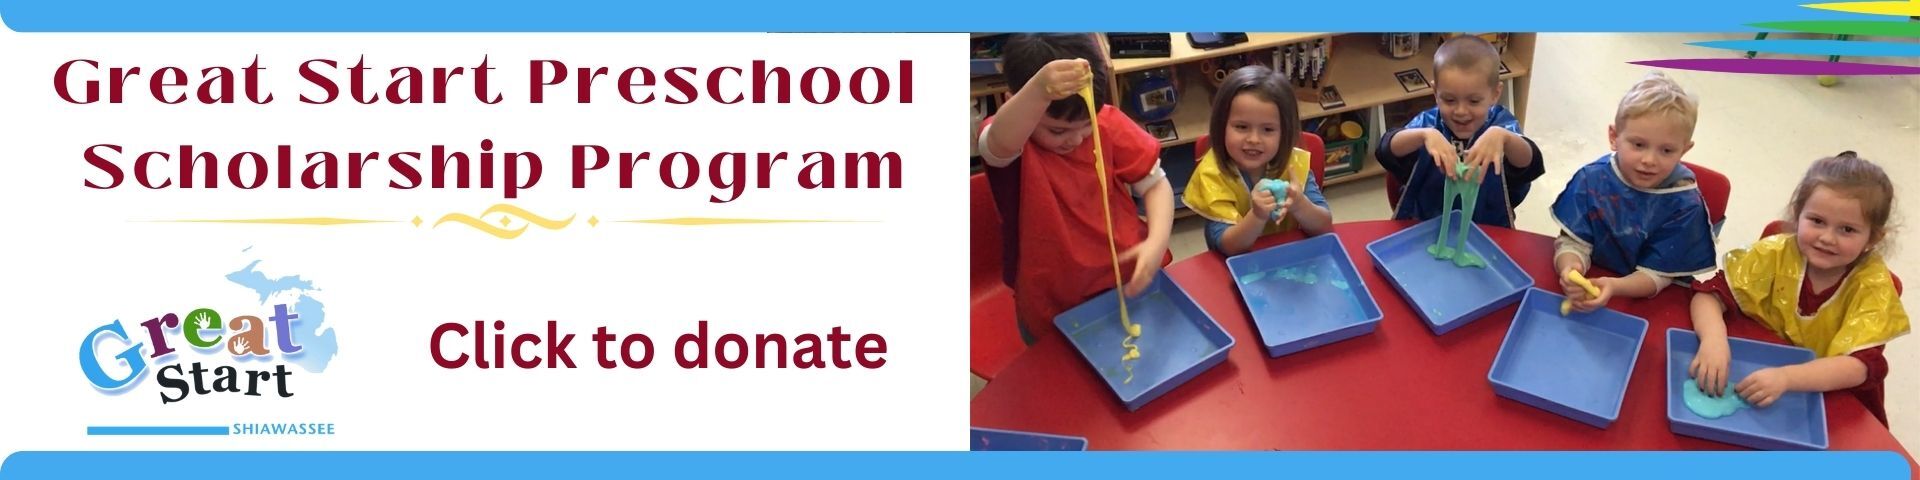 Click to donate to the Great Start Preschool Scholarship program